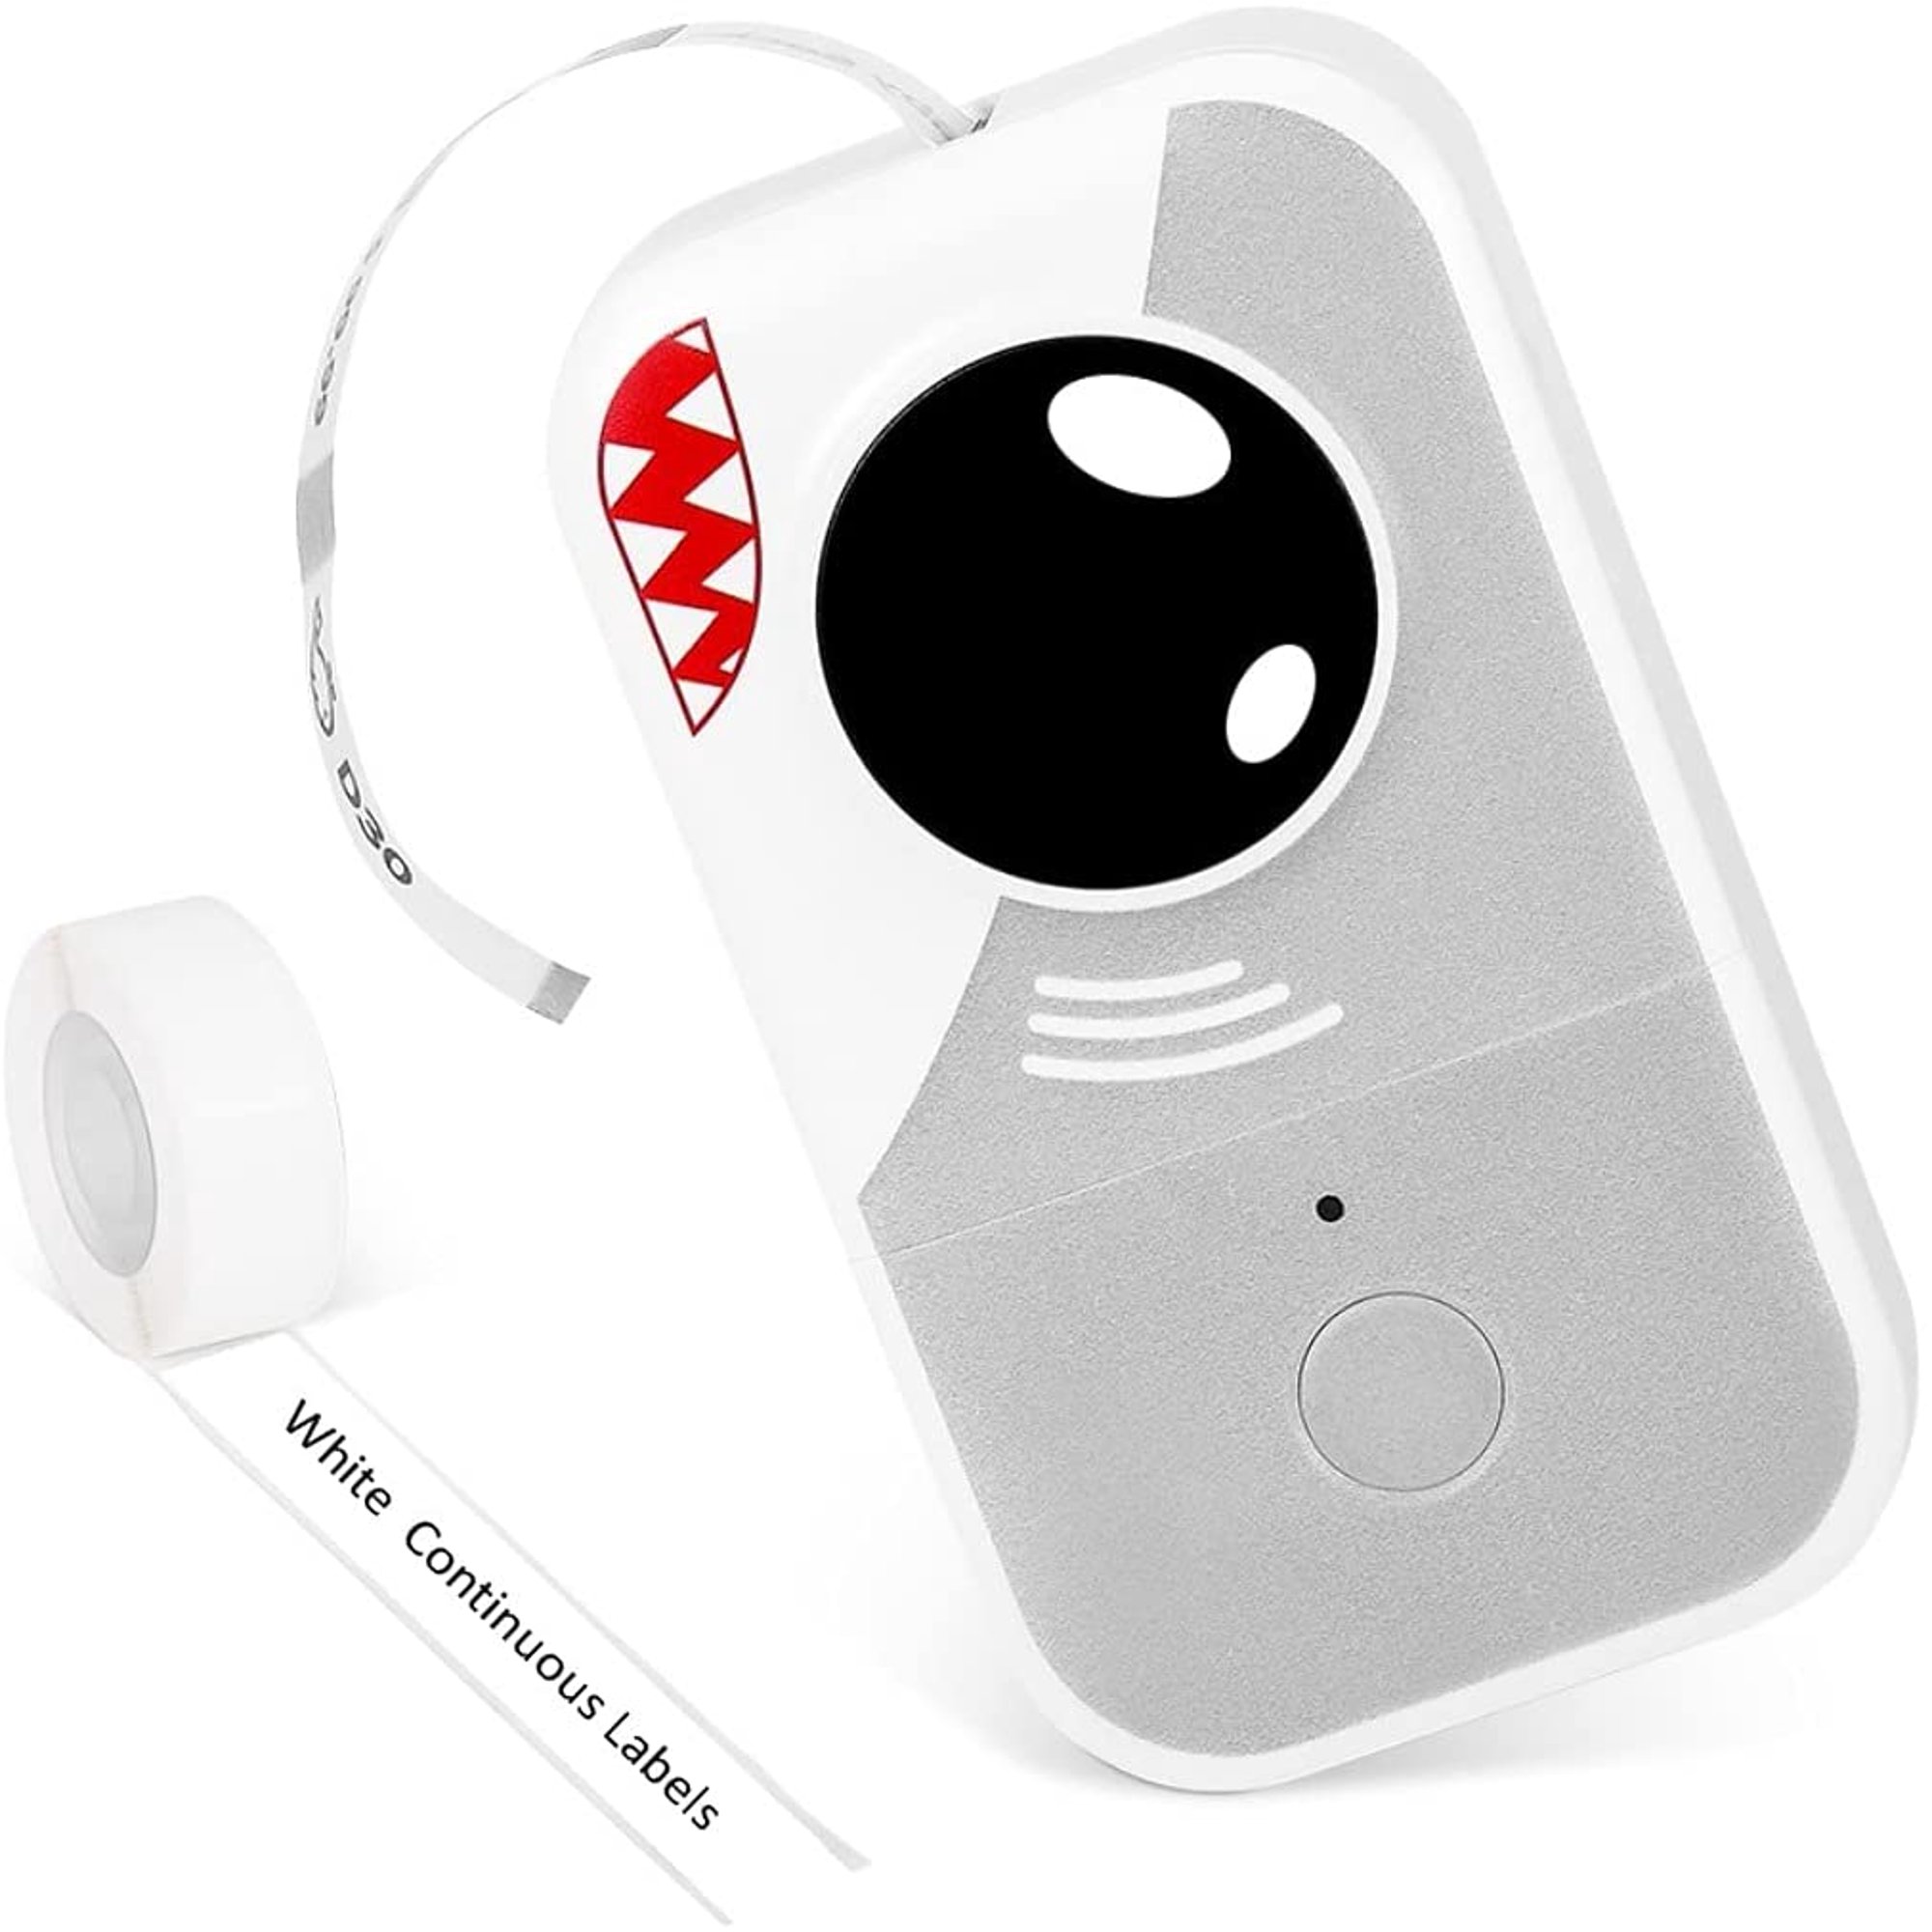 Bluetooth Mini Label Maker Thermal Printer, Office Home Organization, Gift, School Supplies